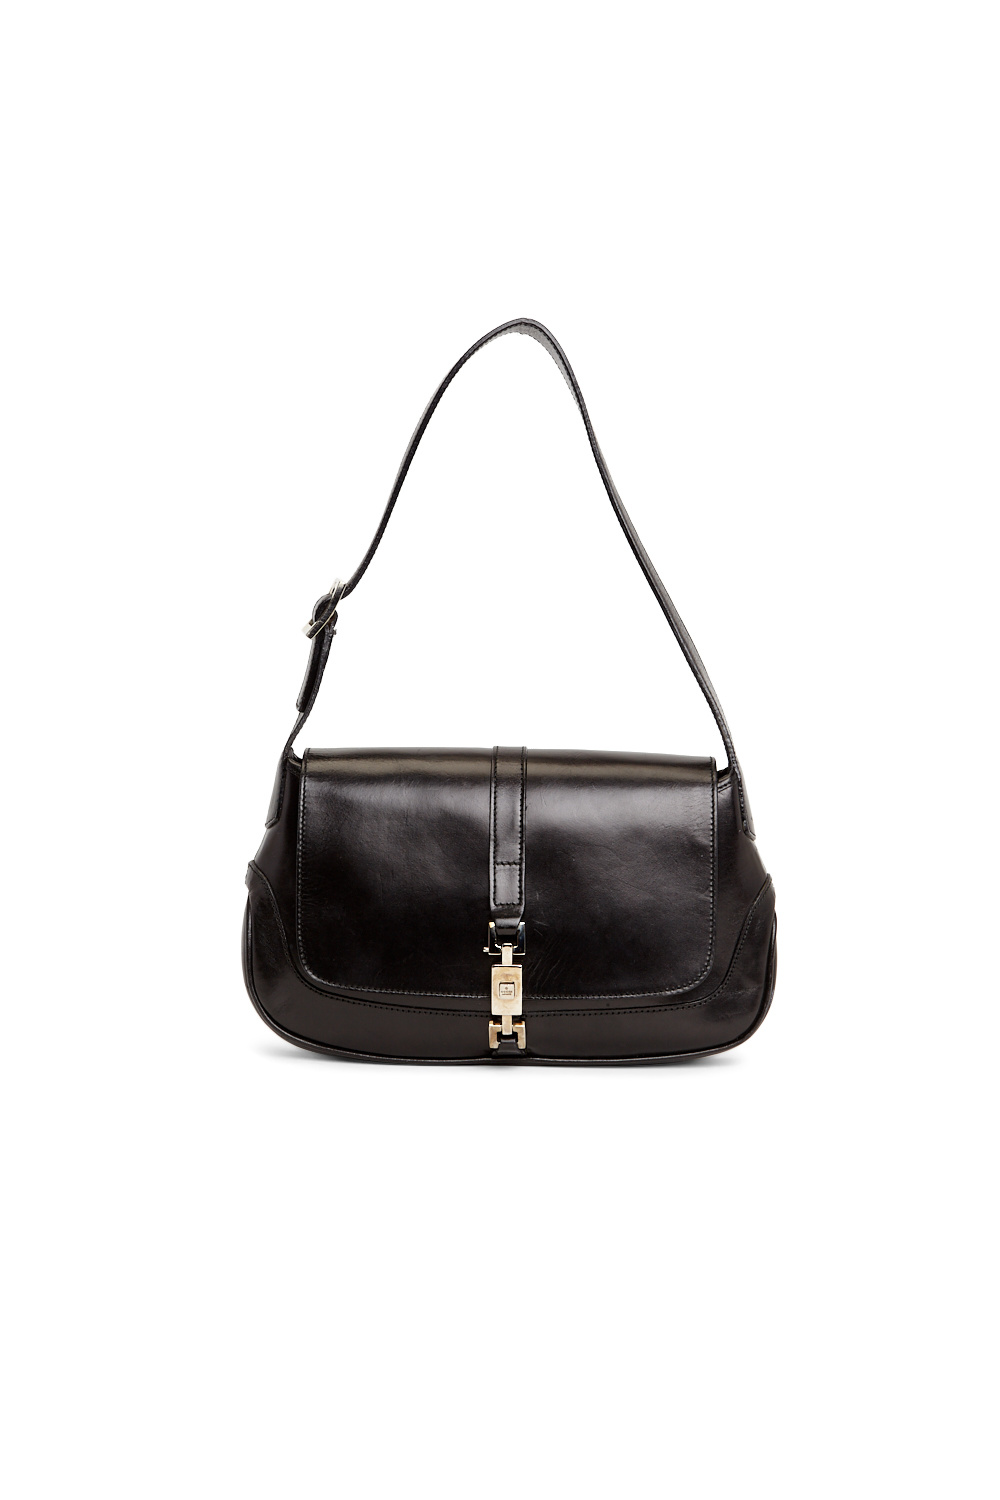 Gucci Vintage Black Leather Small Jackie Hobo Shoulder Bag - RETYCHE